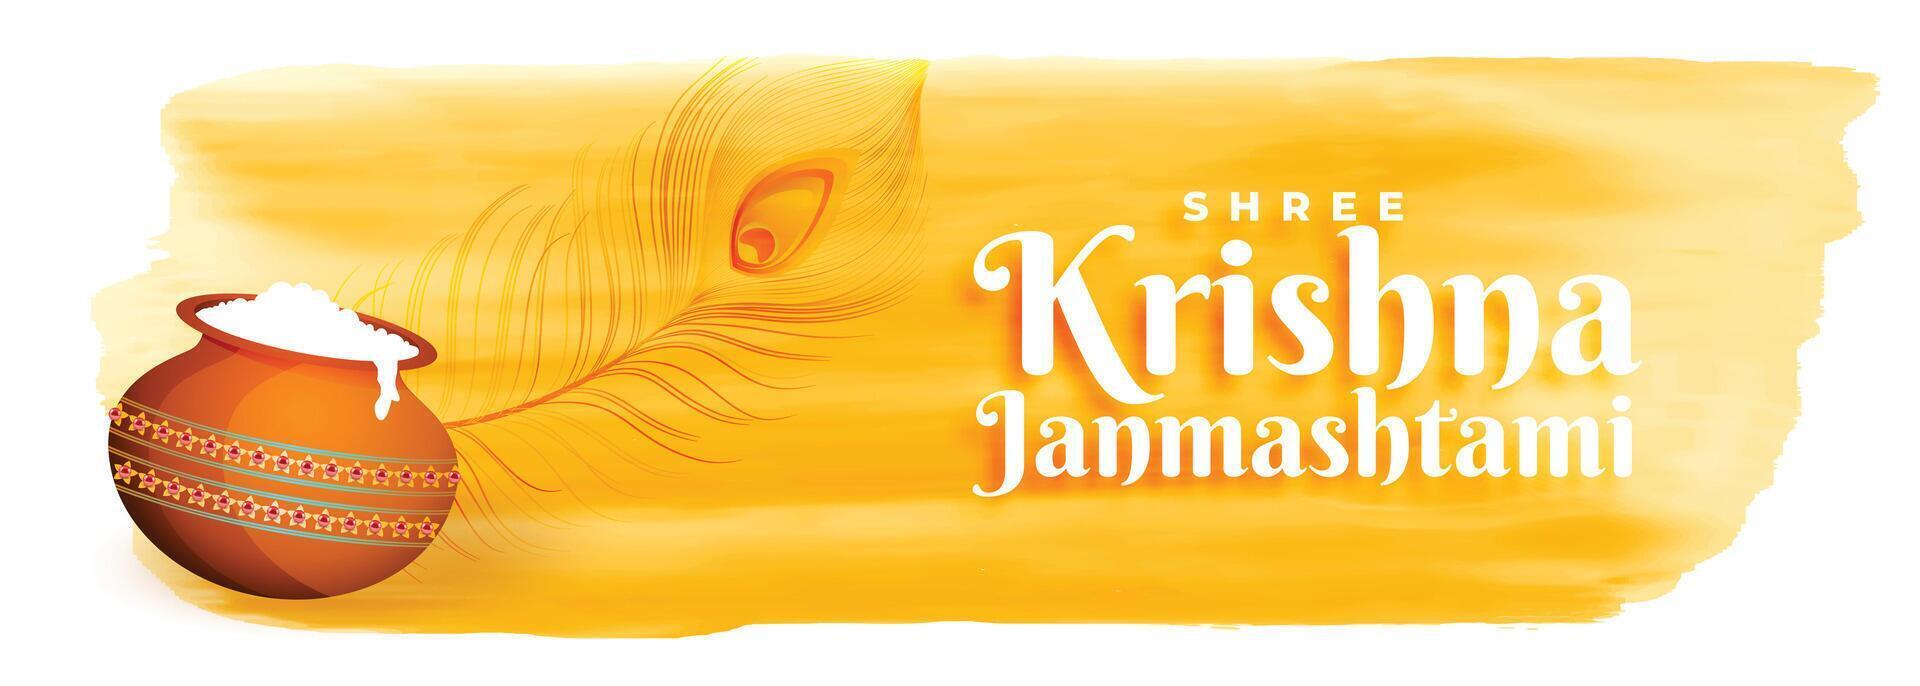 shree krishna janmashtami Festival aquarelle bannière conception vecteur